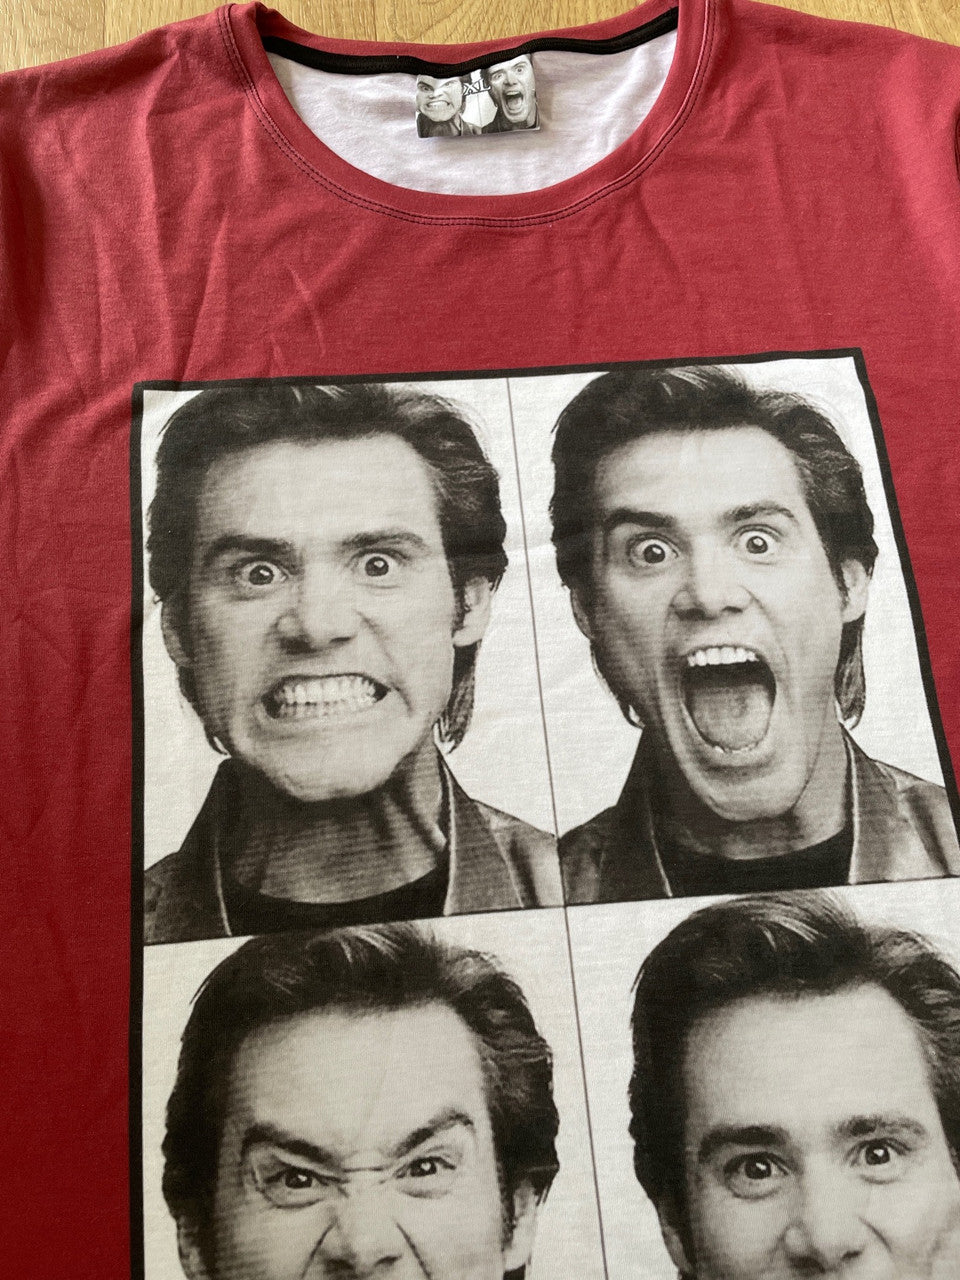 Jim Carrey KiSS T-Shirt - Funny Faces - Mask, Ace Ventura, Liar Liar - Movie Fan